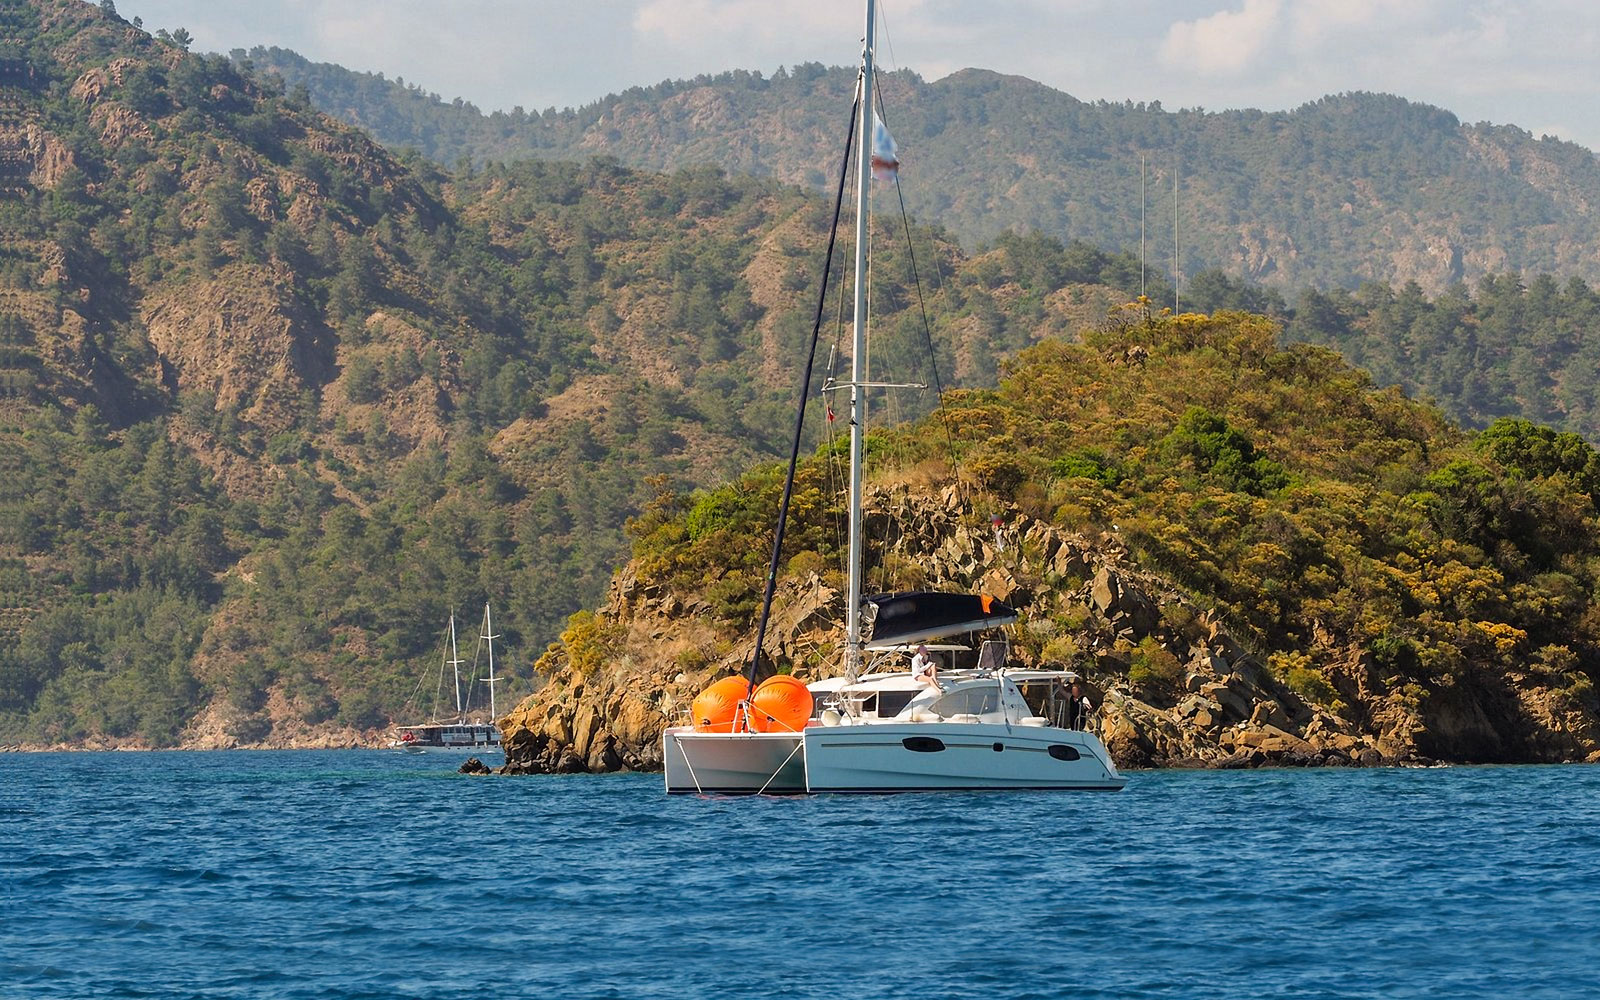 Have Catamaran tour in Costa Rica